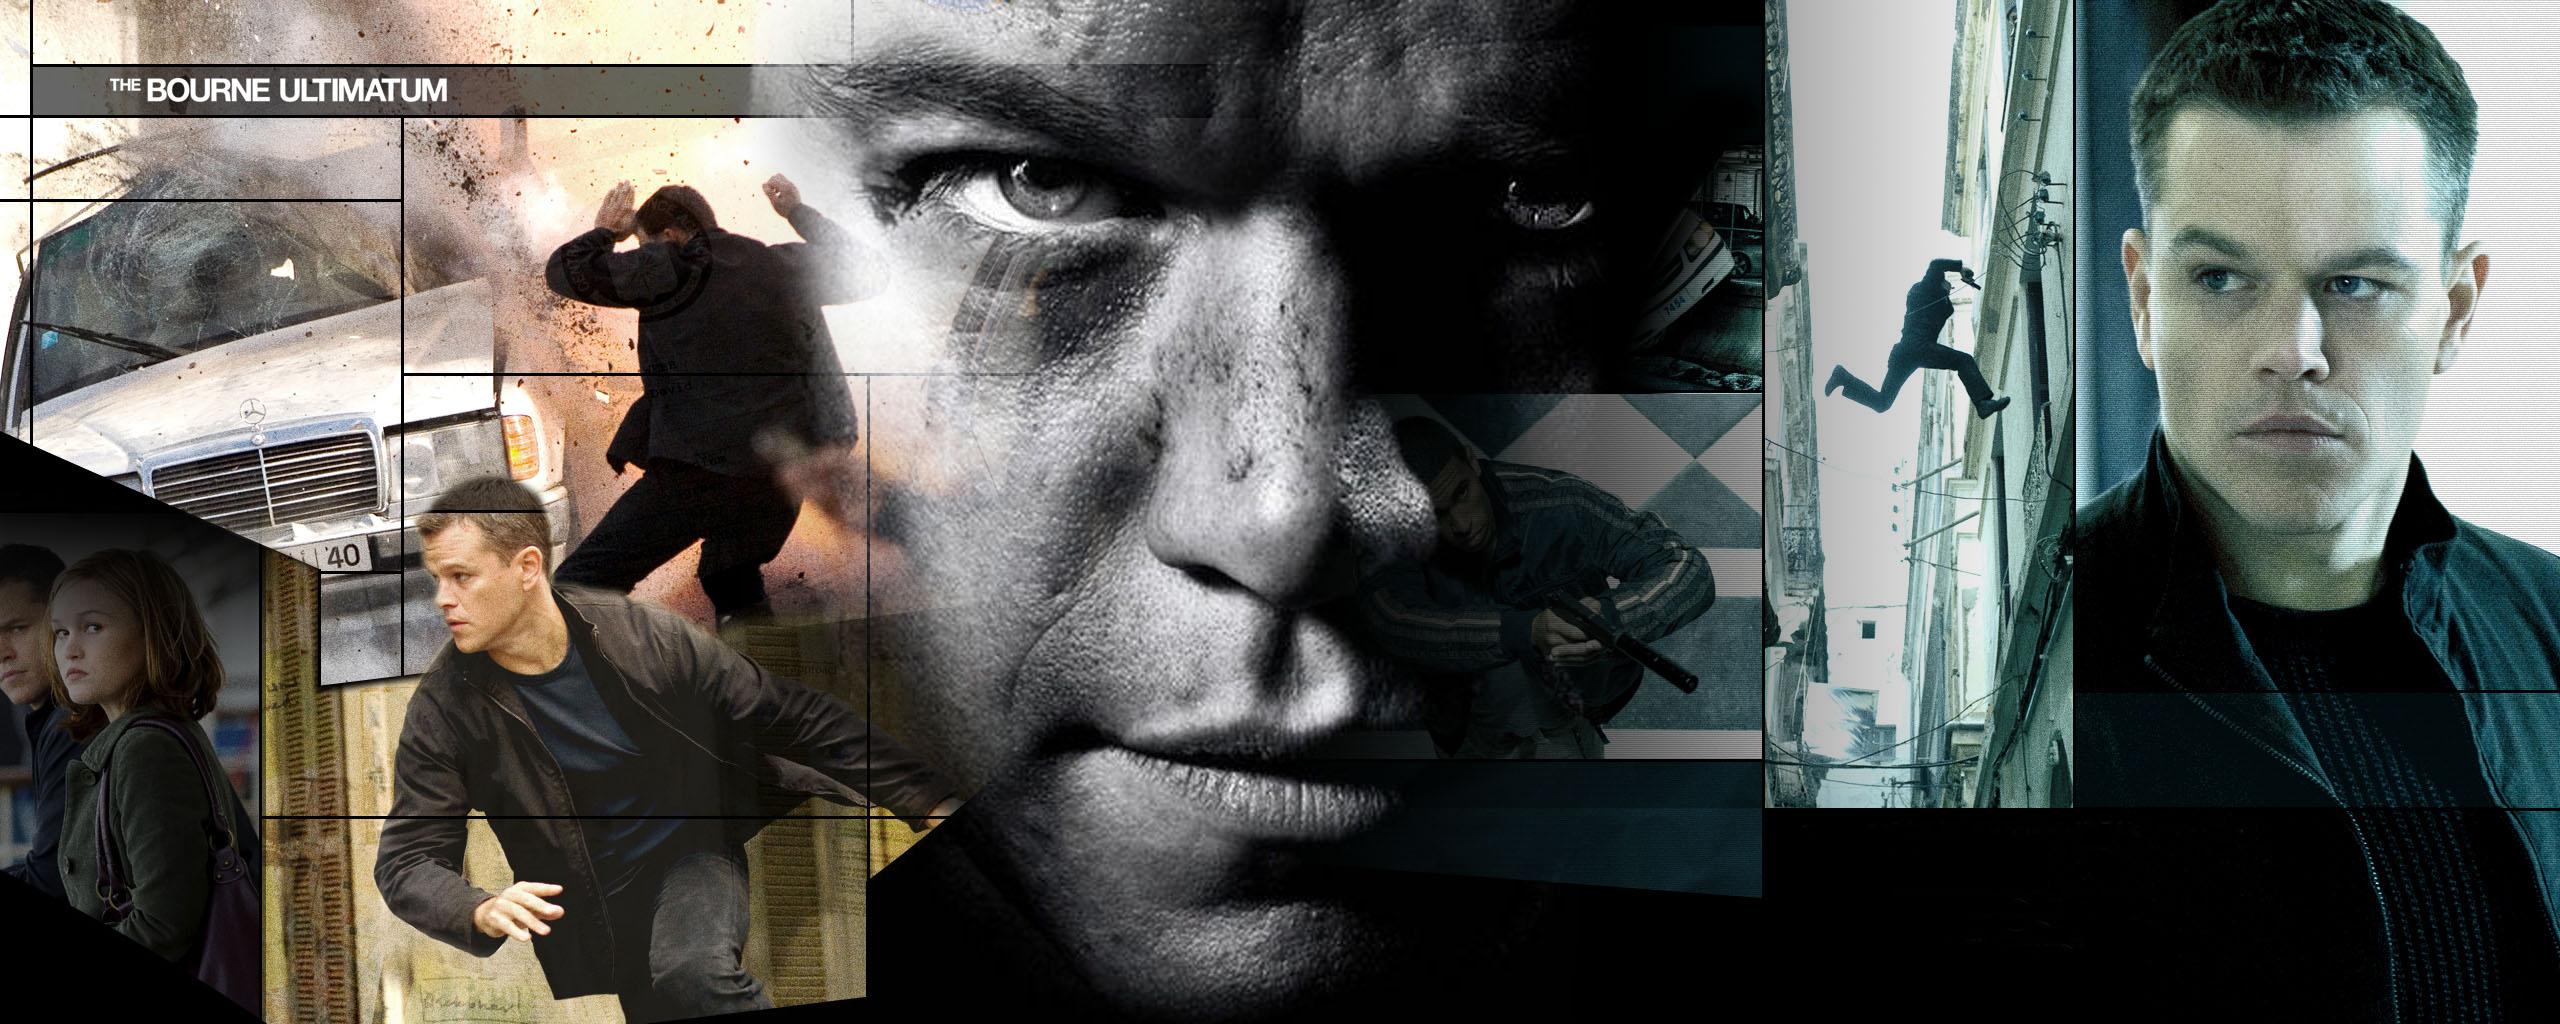 The Bourne Ultimatum Review Collider